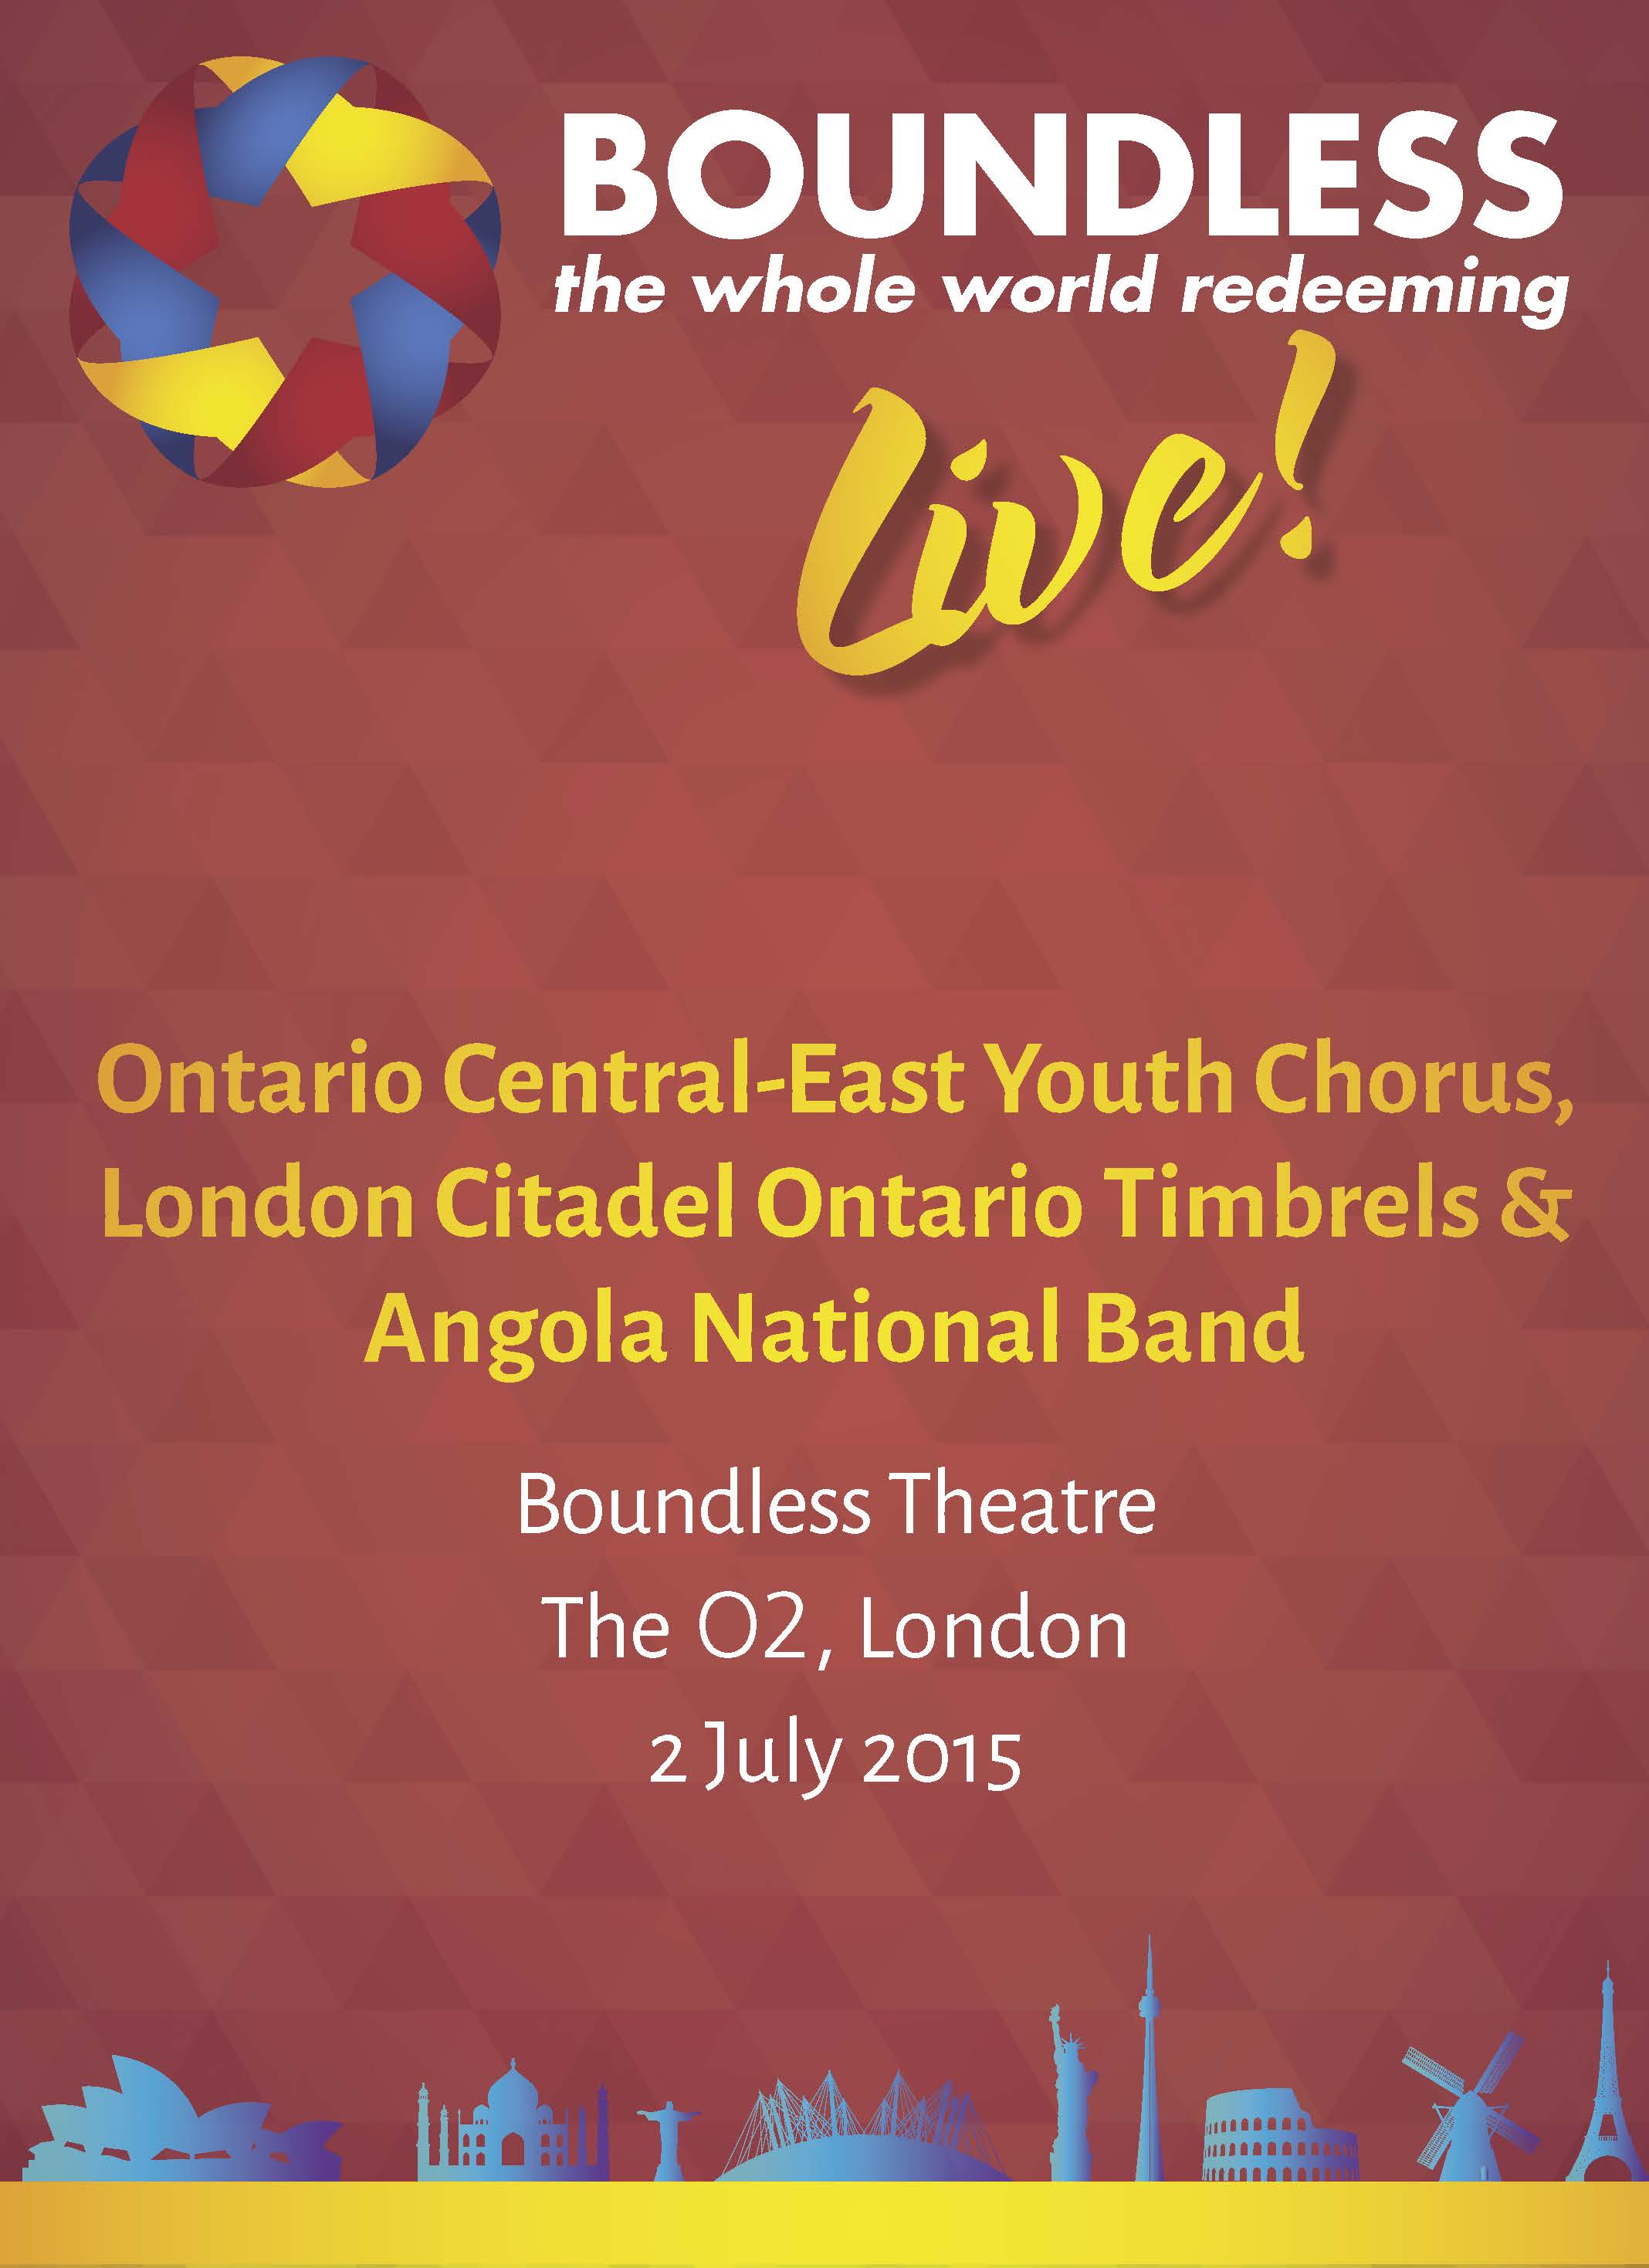 Boundless Live! Concert-Ontario Central East Yth Chorus, London Citadel Timbrels, Angola National Bd